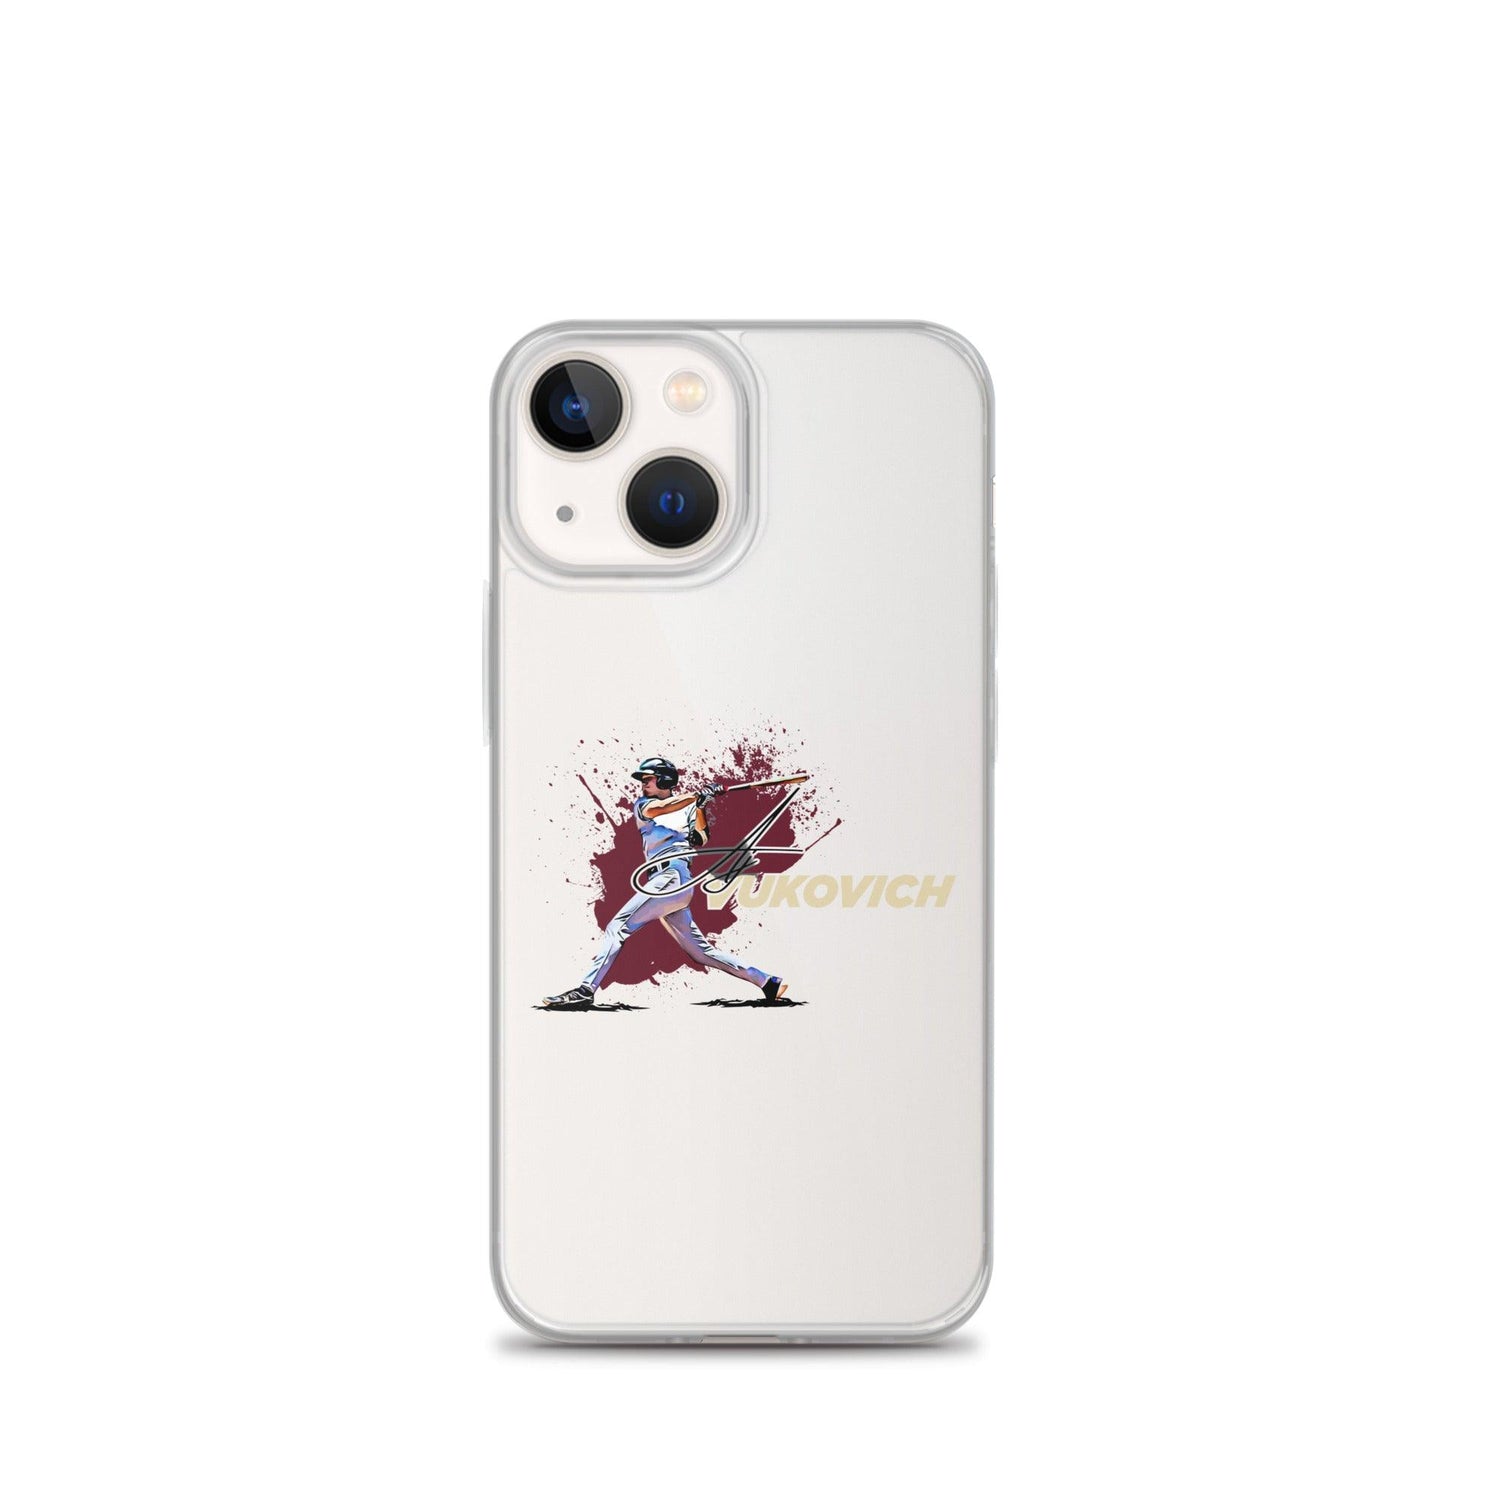 AJ Vukovich “Star” iPhone Case - Fan Arch